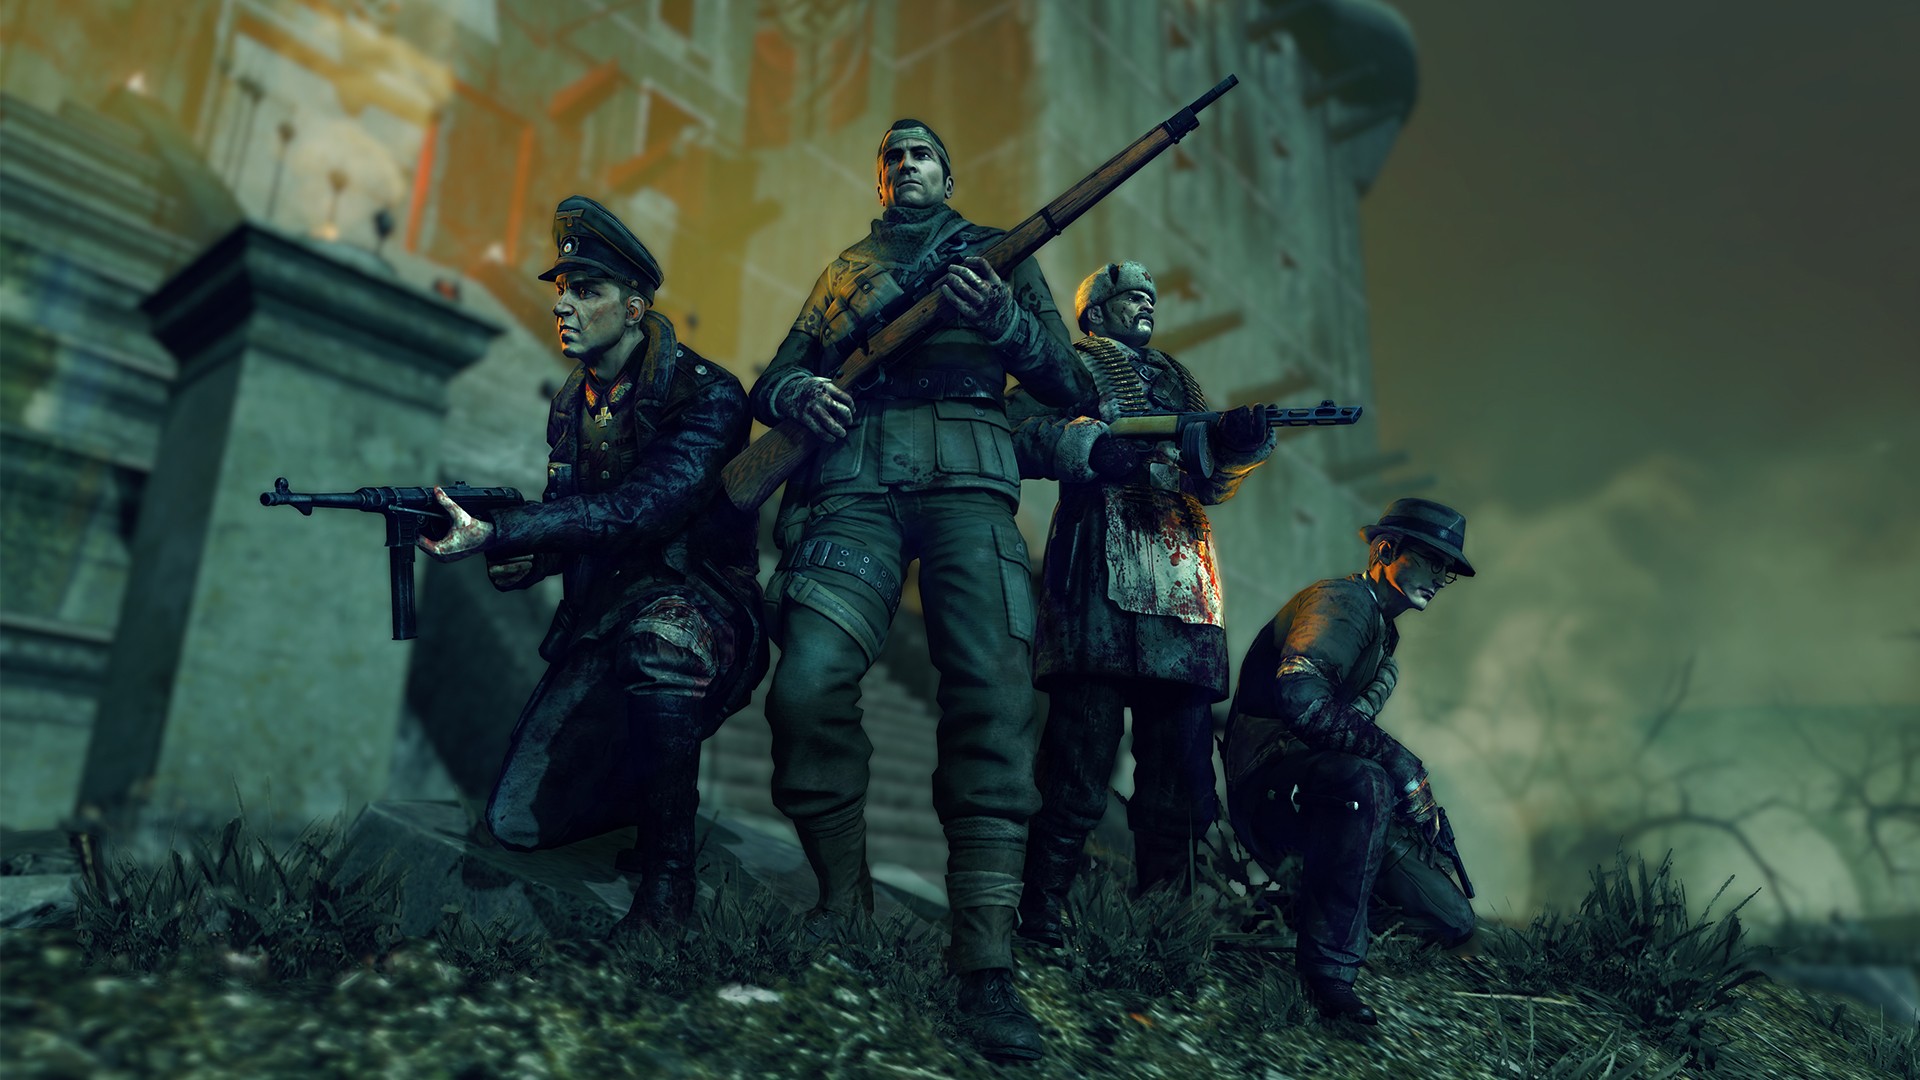 girasol aceleración Receptor Sniper Elite: Zombie Nazi Army Trilogy Heading to Xbox One and PS4 Soon